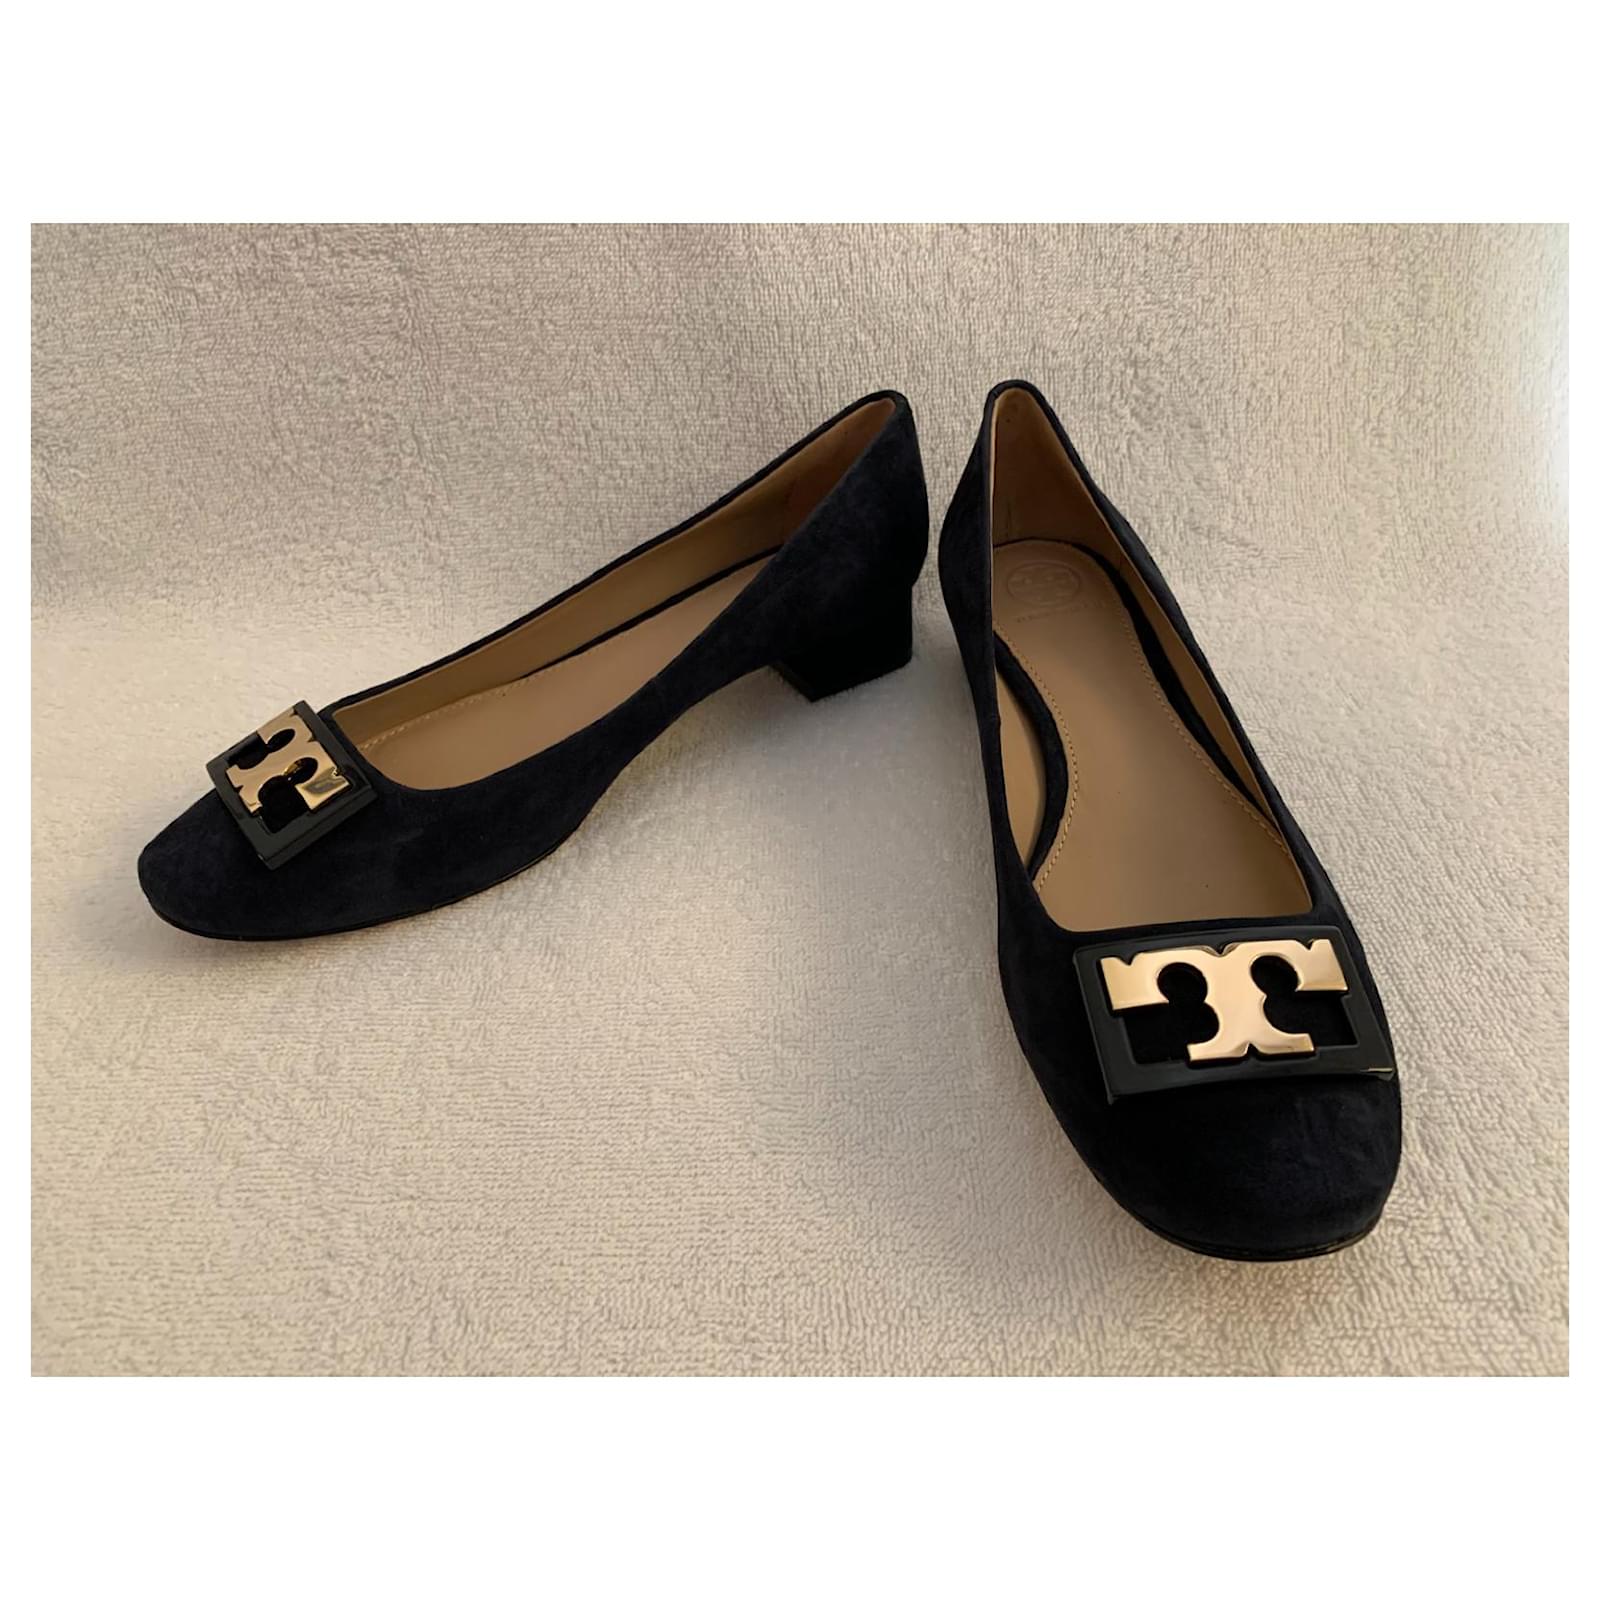 Tory Burch Womens Gigi Pointed-Toe Flats